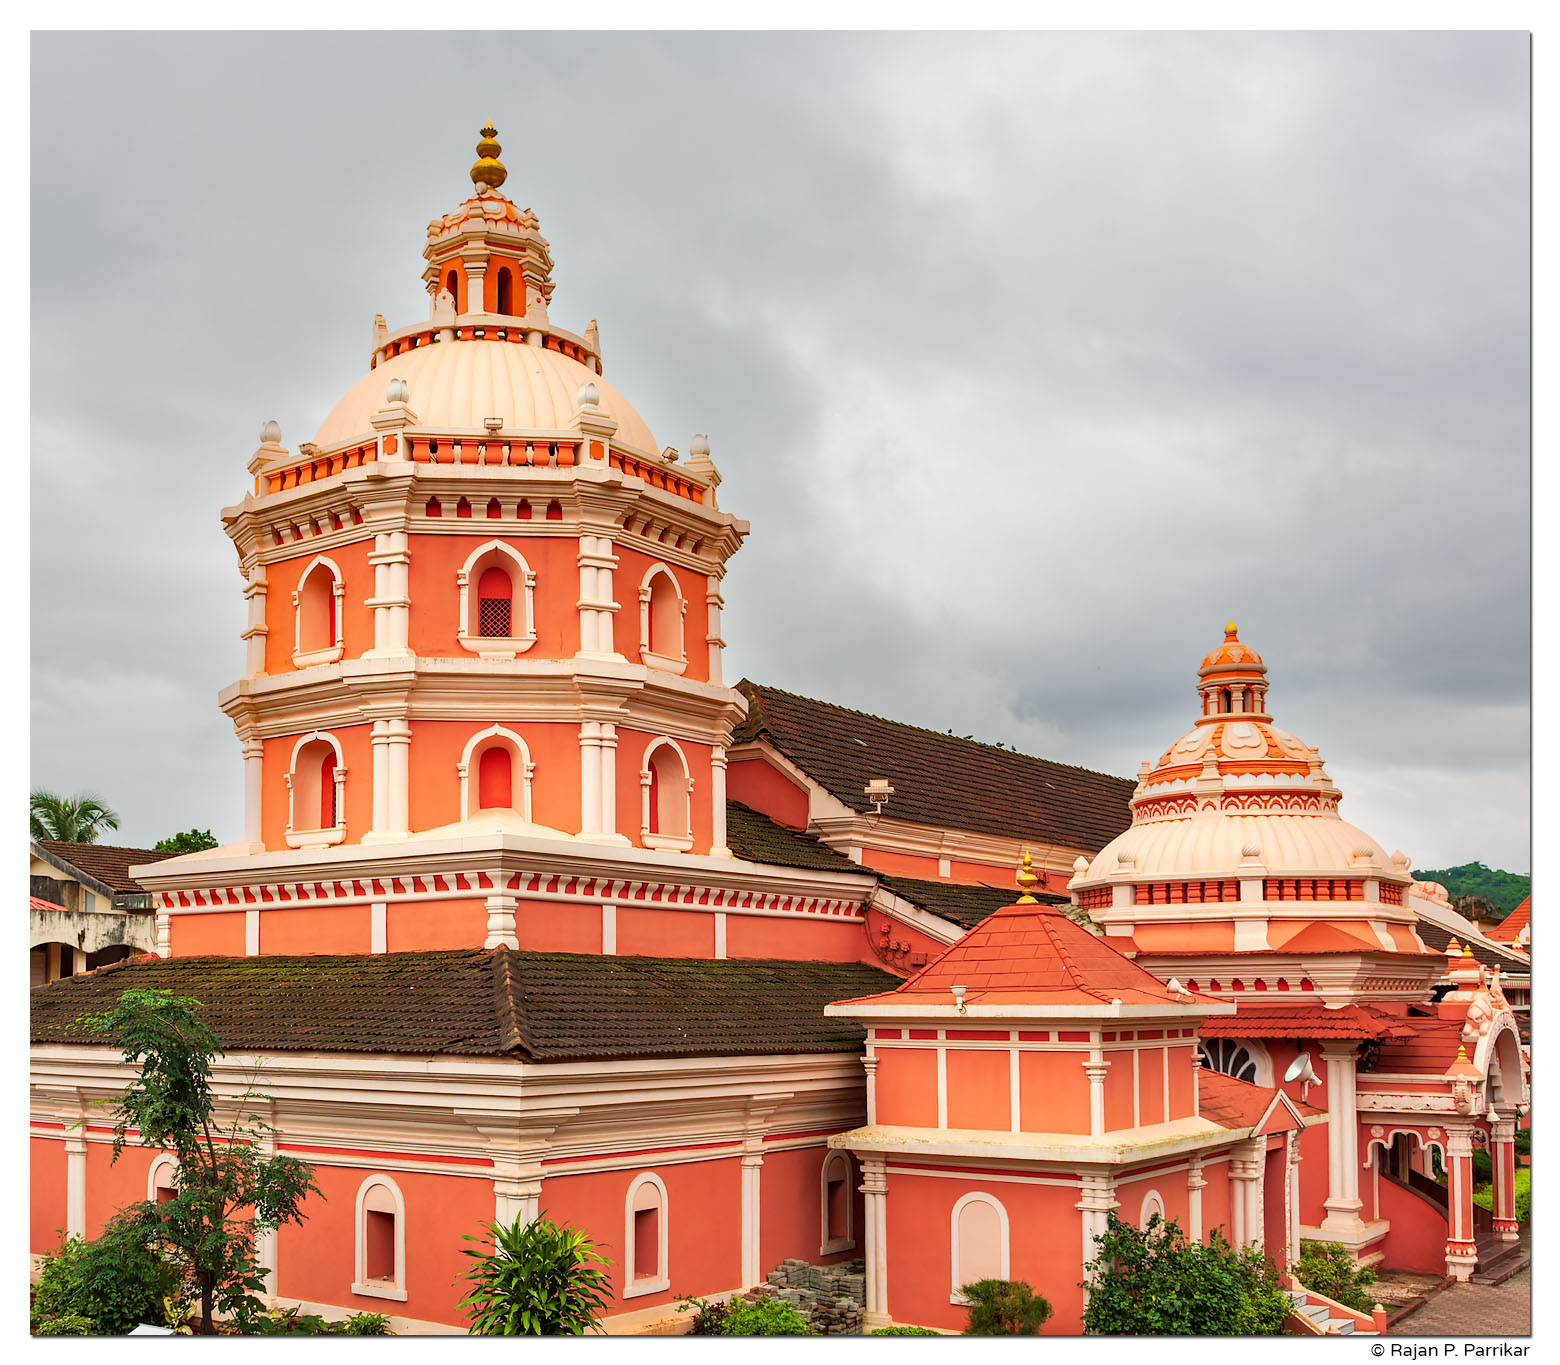 Mahalakshmi temple, Bandora, Goa